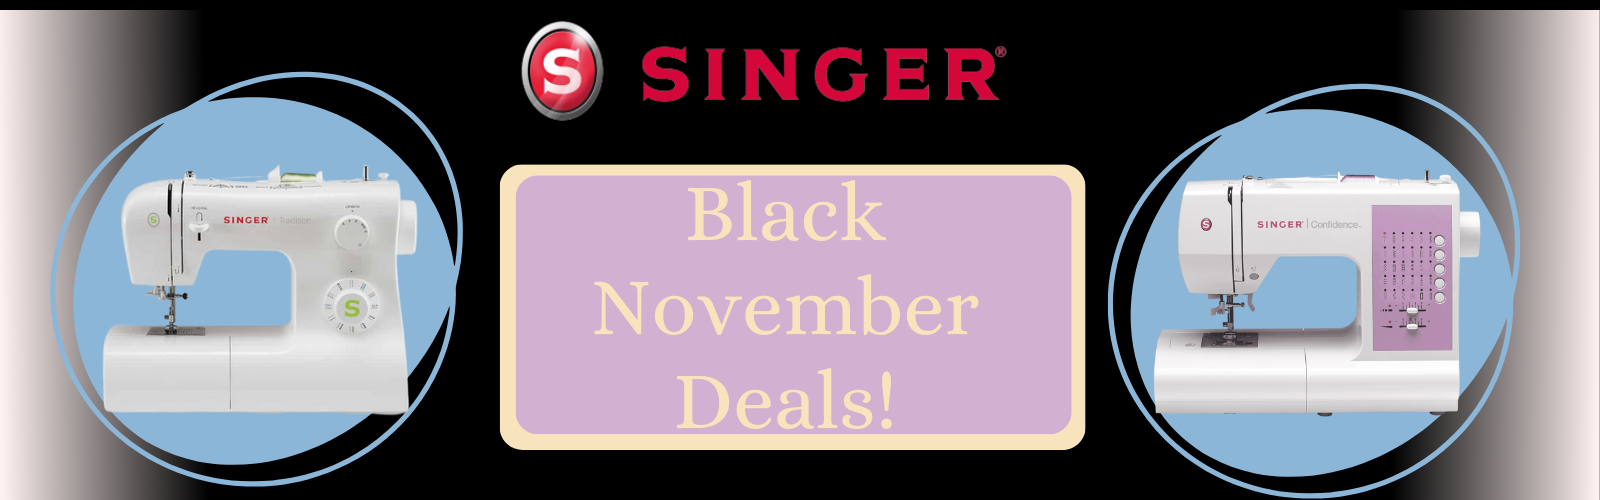 Black november offers